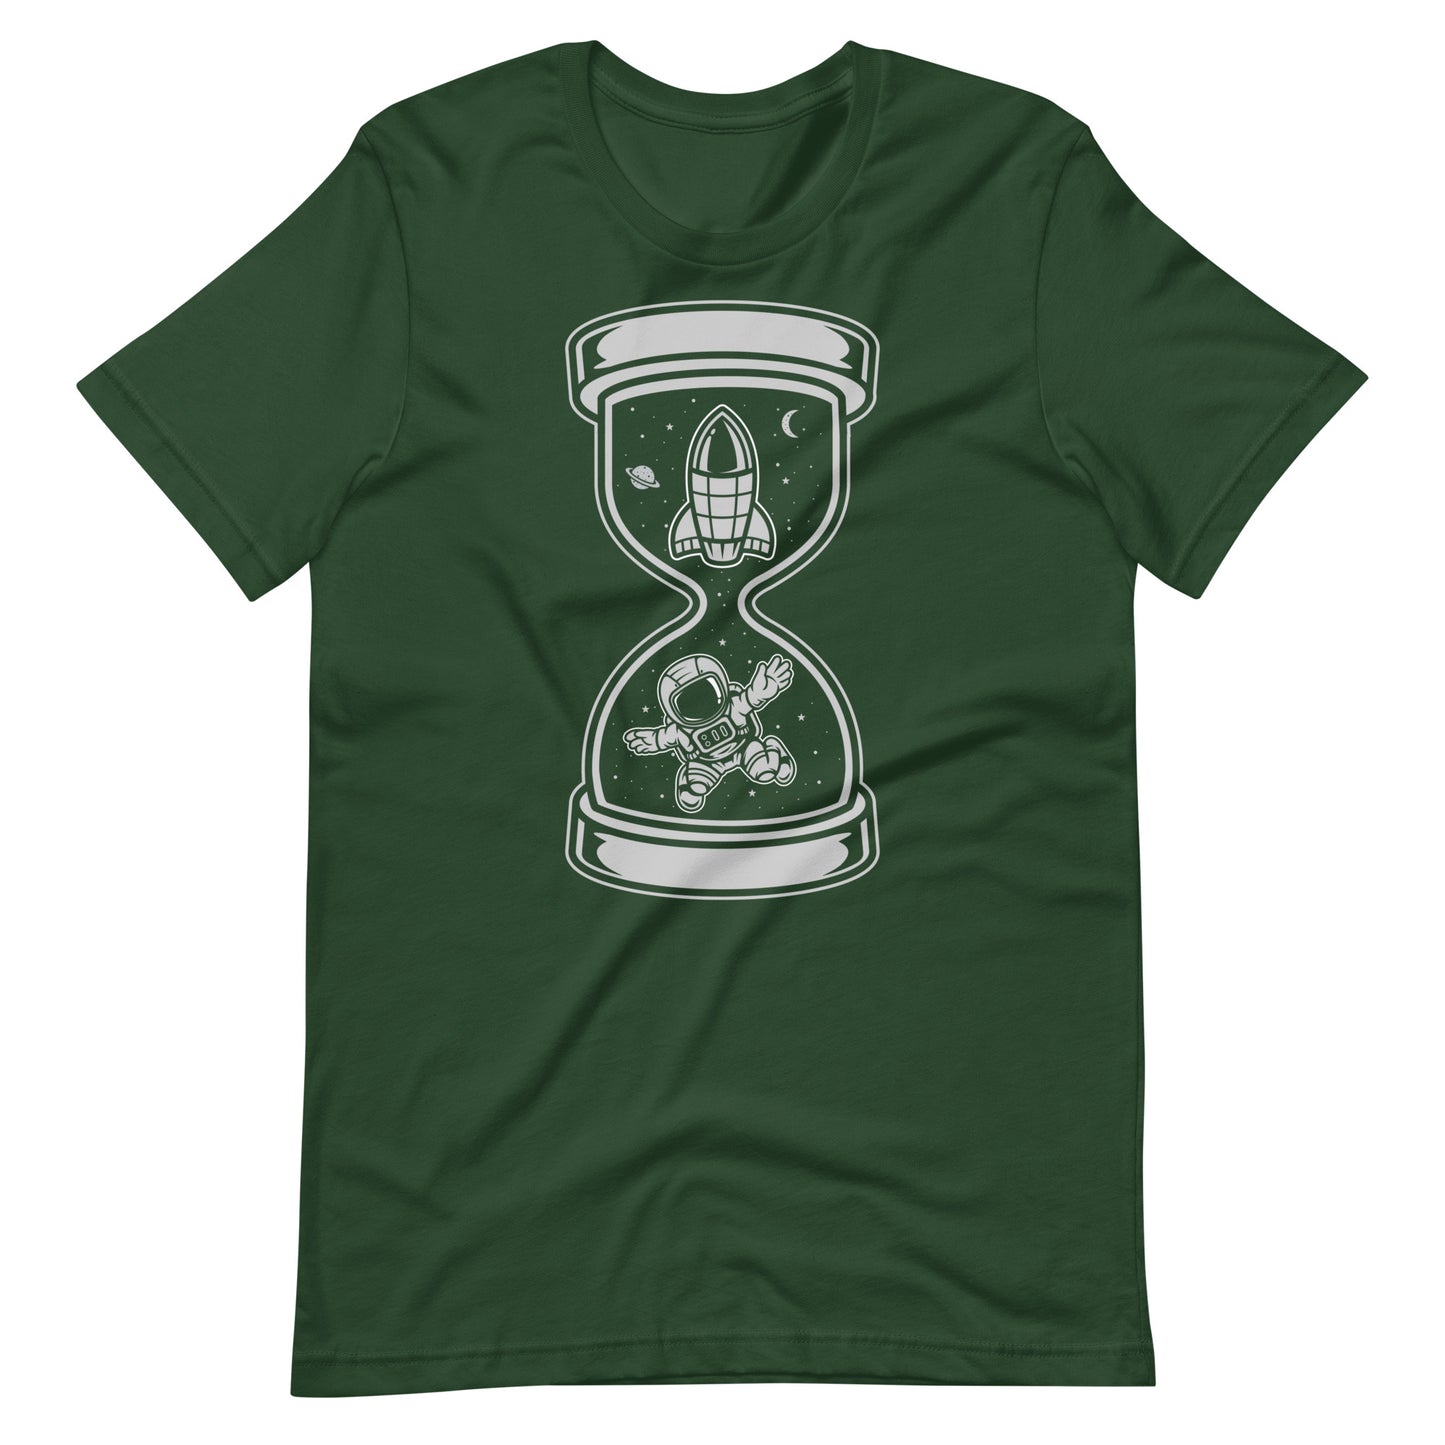 Astronaut Time - Men's t-shirt - Forest Front